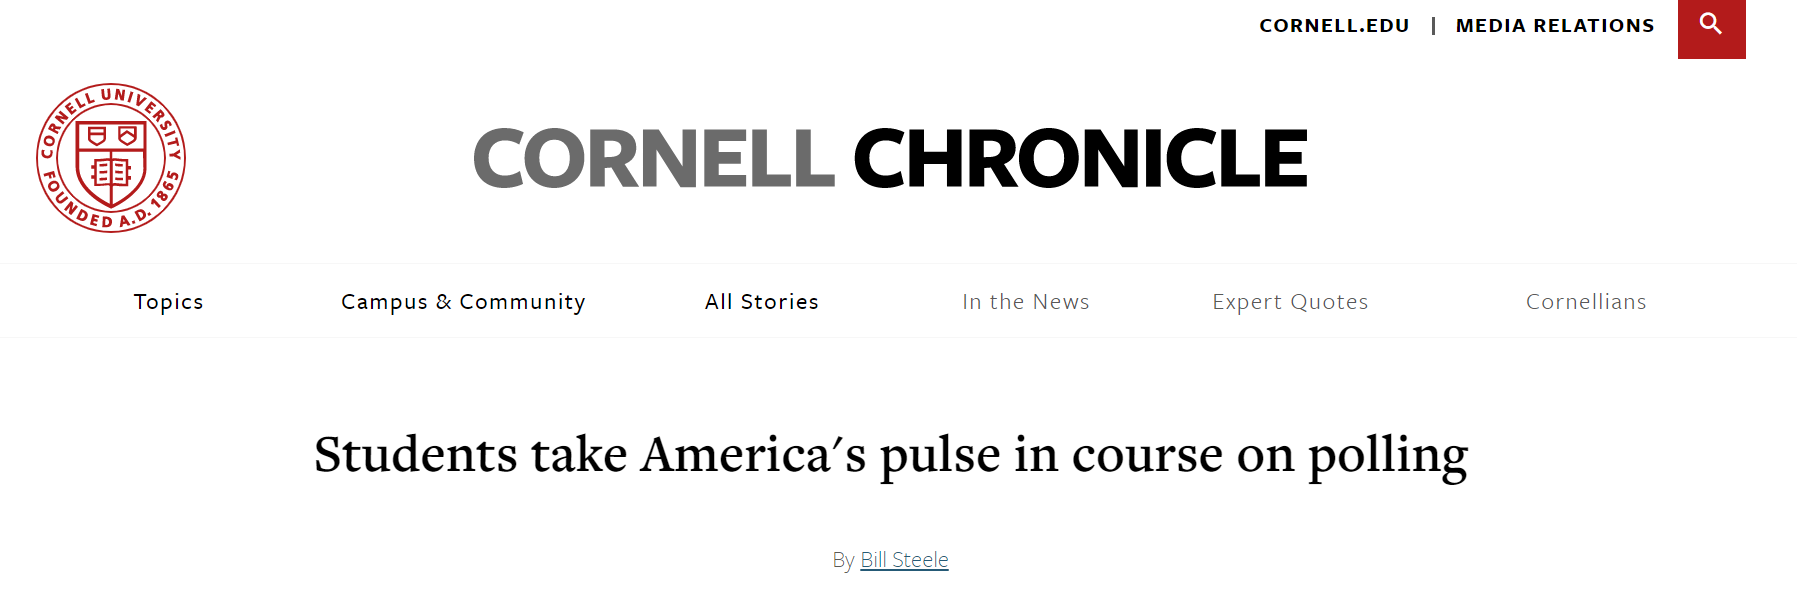 cornell chronicle Taking America's Pulse headline